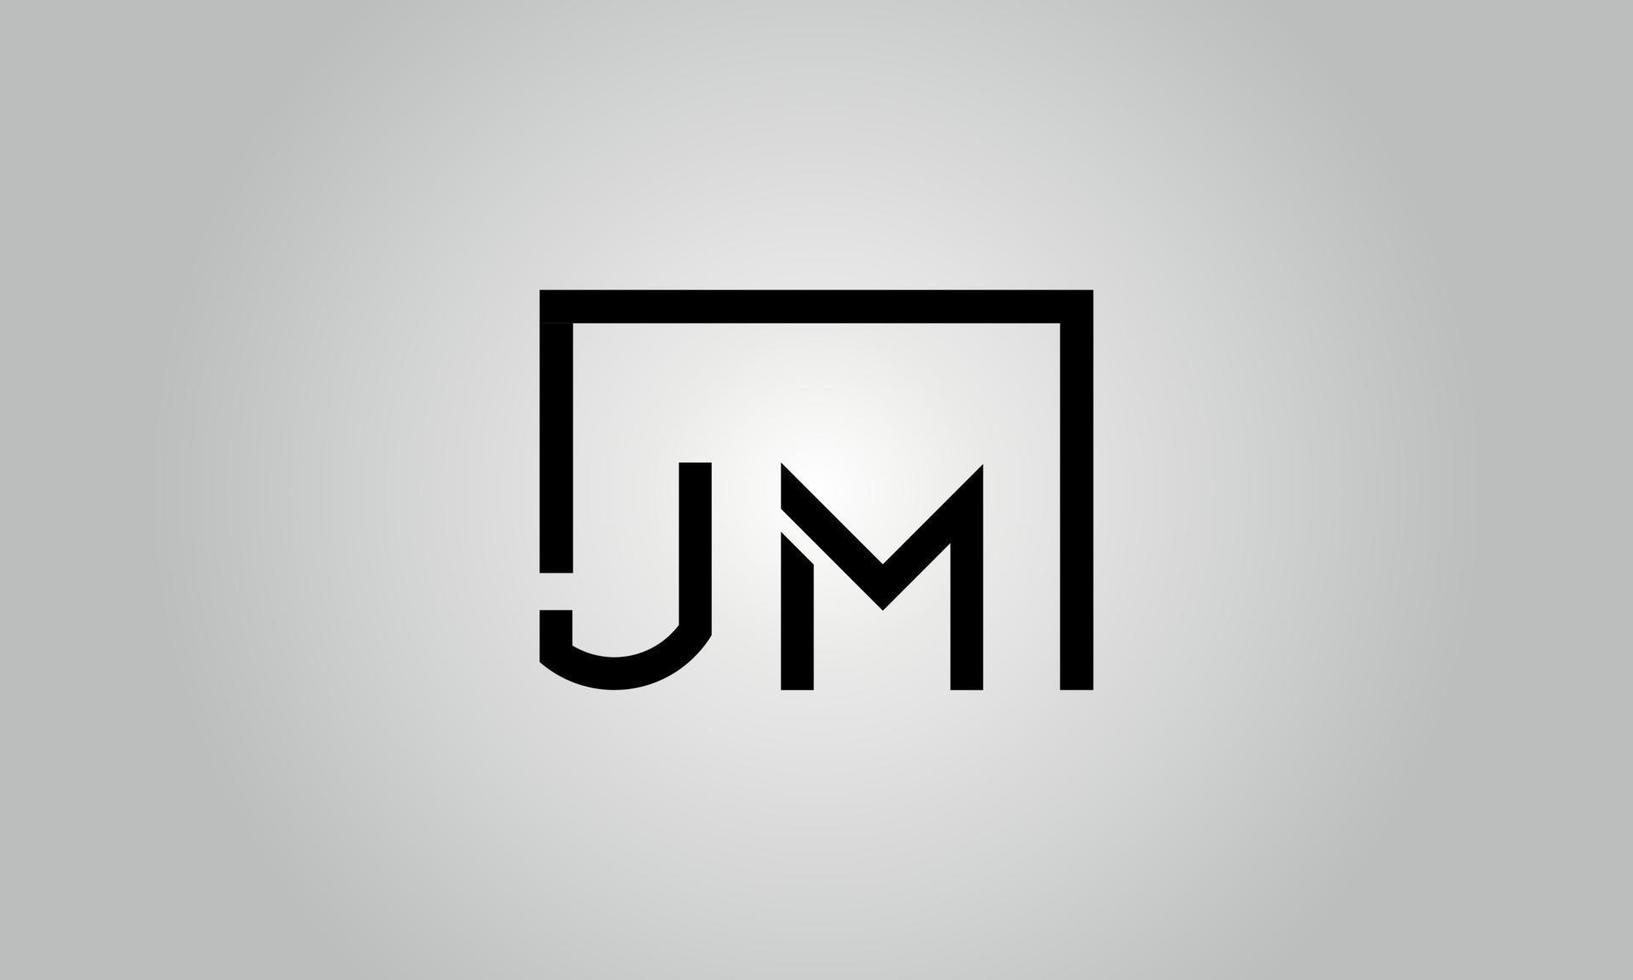 Letter JM logo design. JM logo with square shape in black colors vector free vector template.